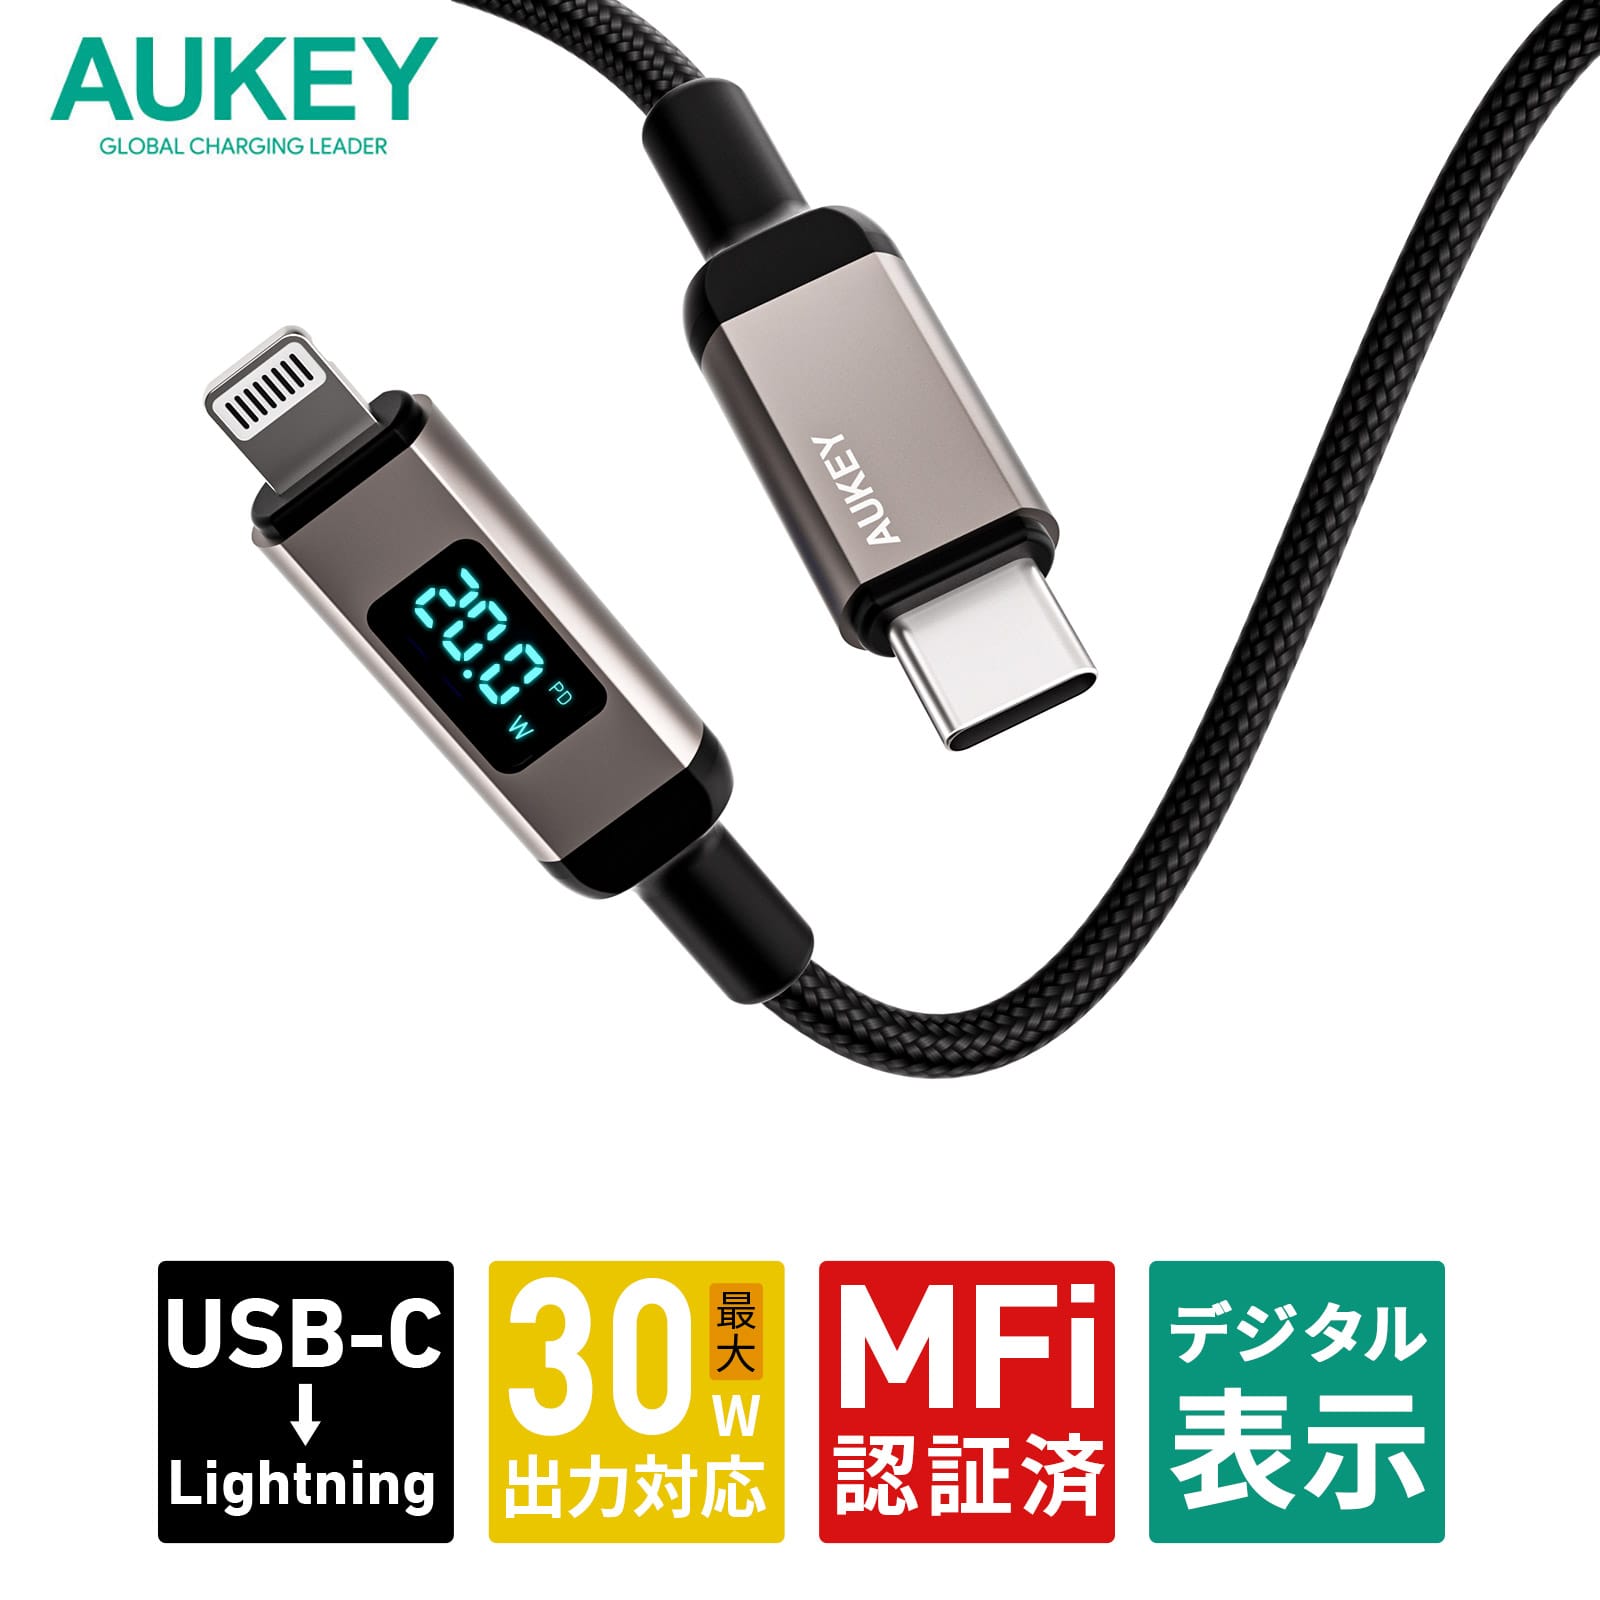 AUKEY、電力表示付きのUSB-C – Lightningケーブルを発売